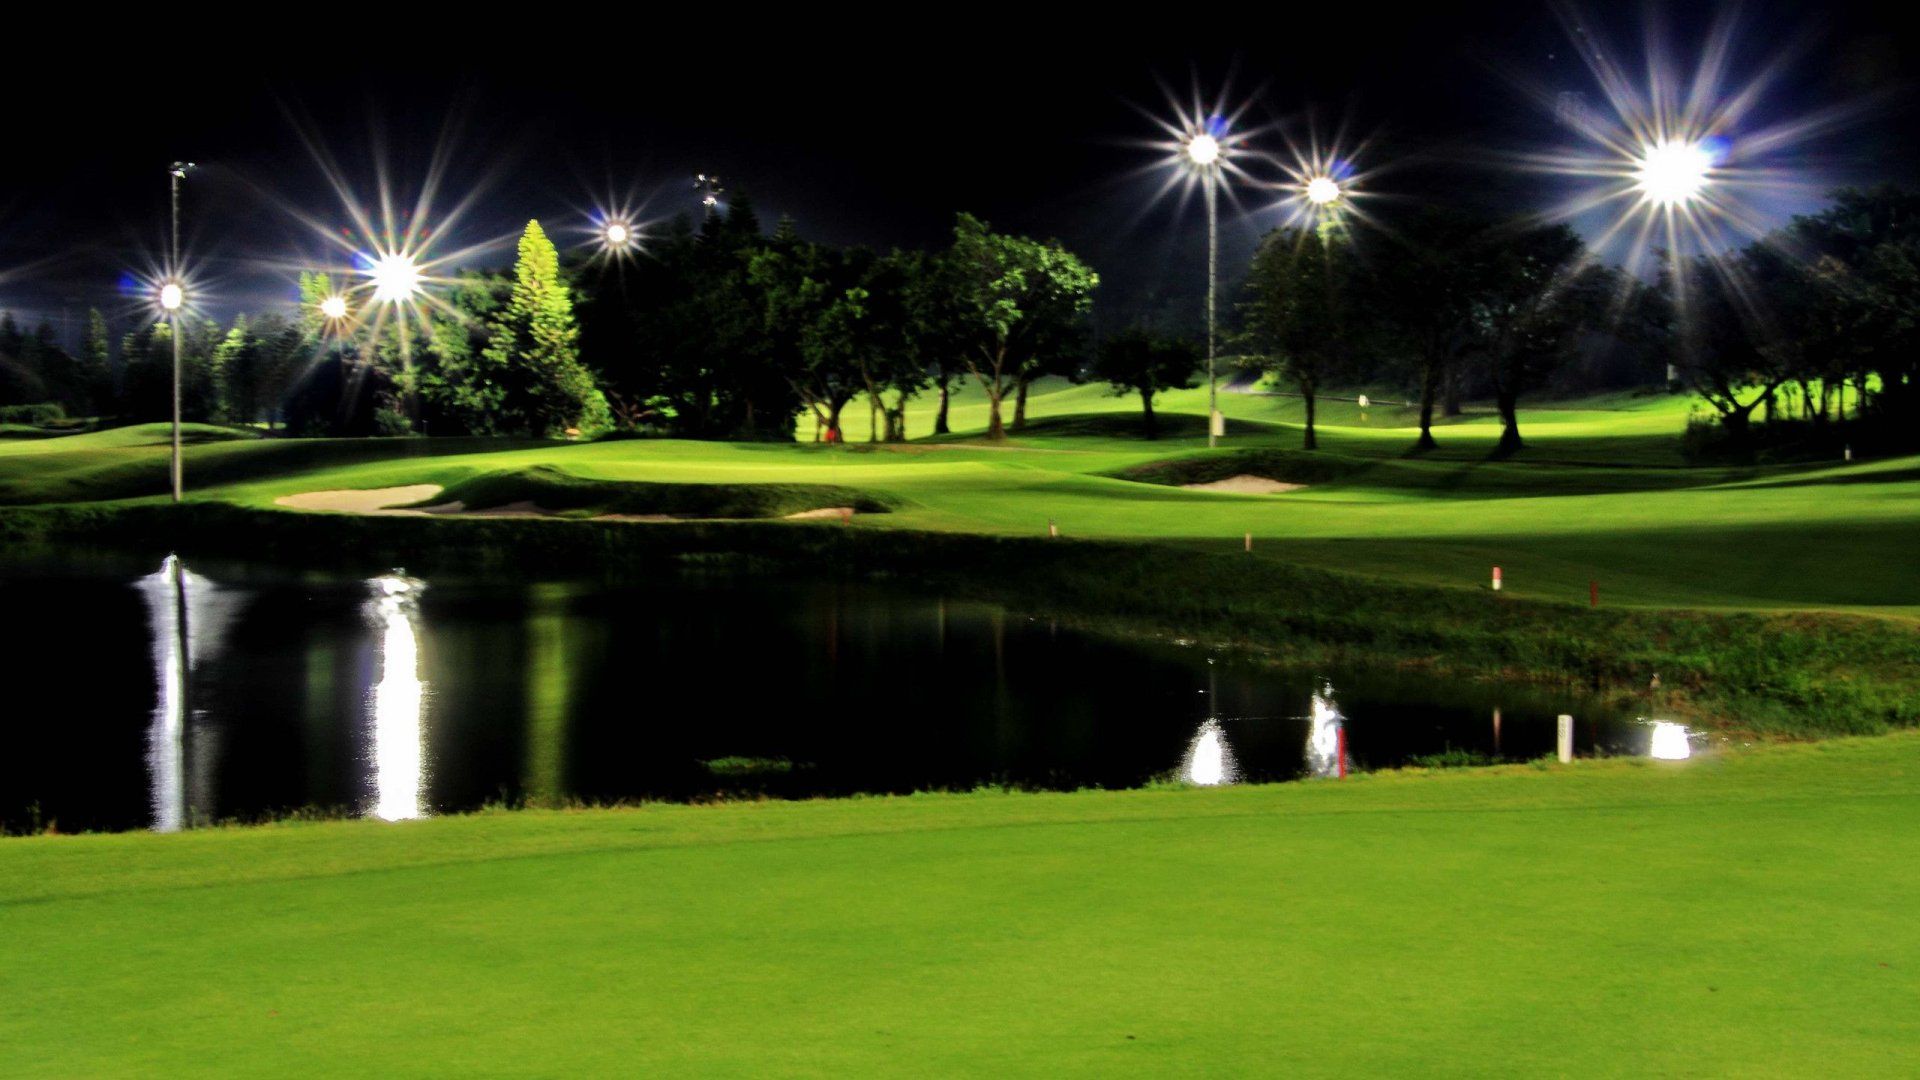 Night Golf Course Wallpaper Download #2659 - Optawall.com